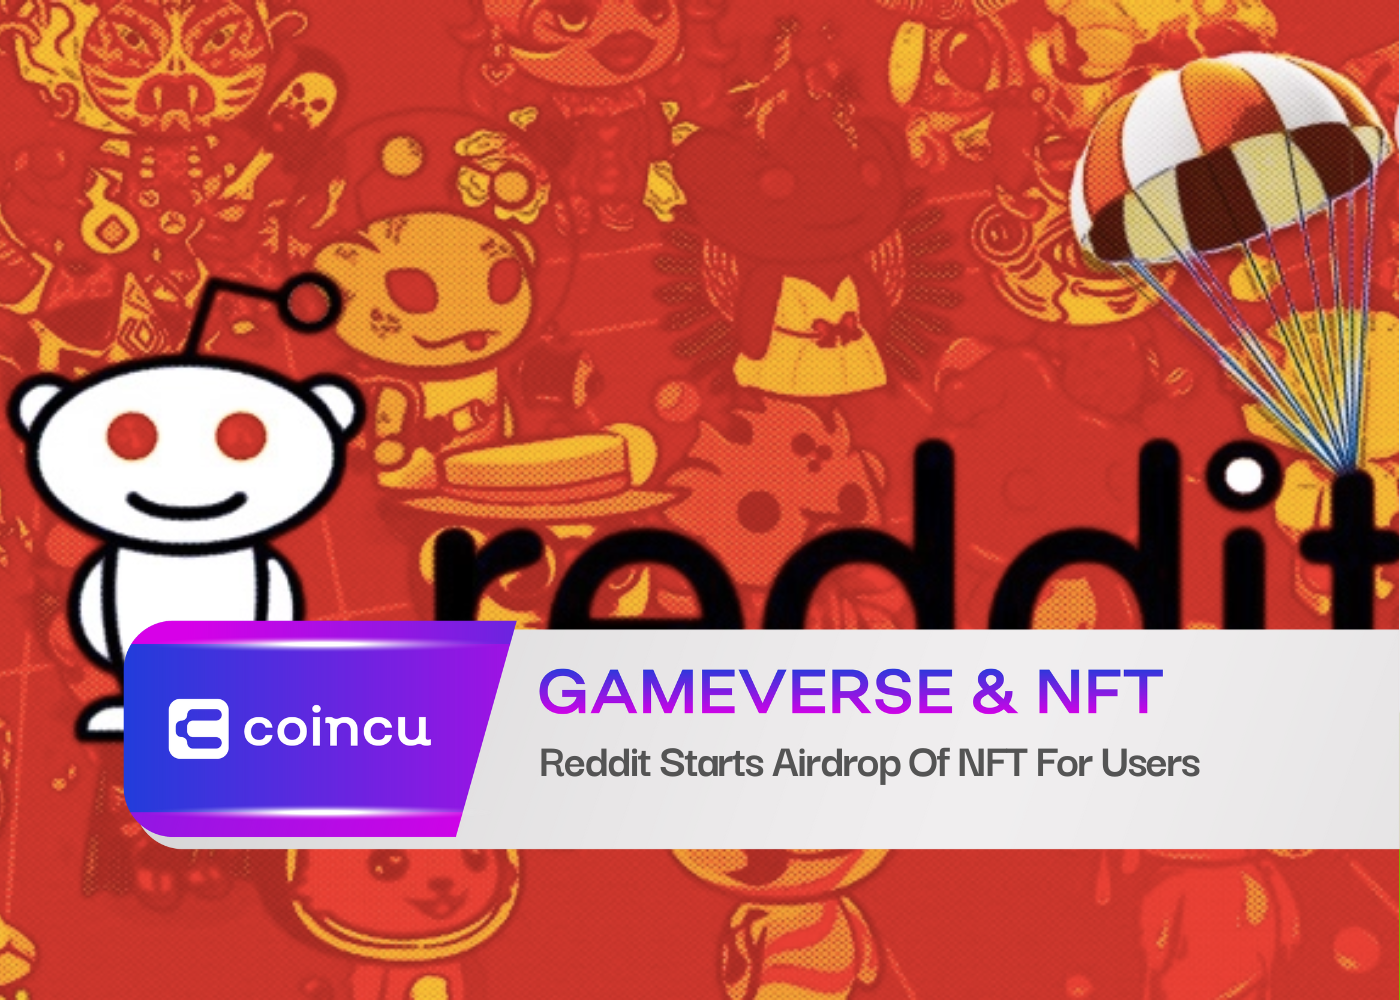 Reddit Starts Airdrop Of NFT For Users